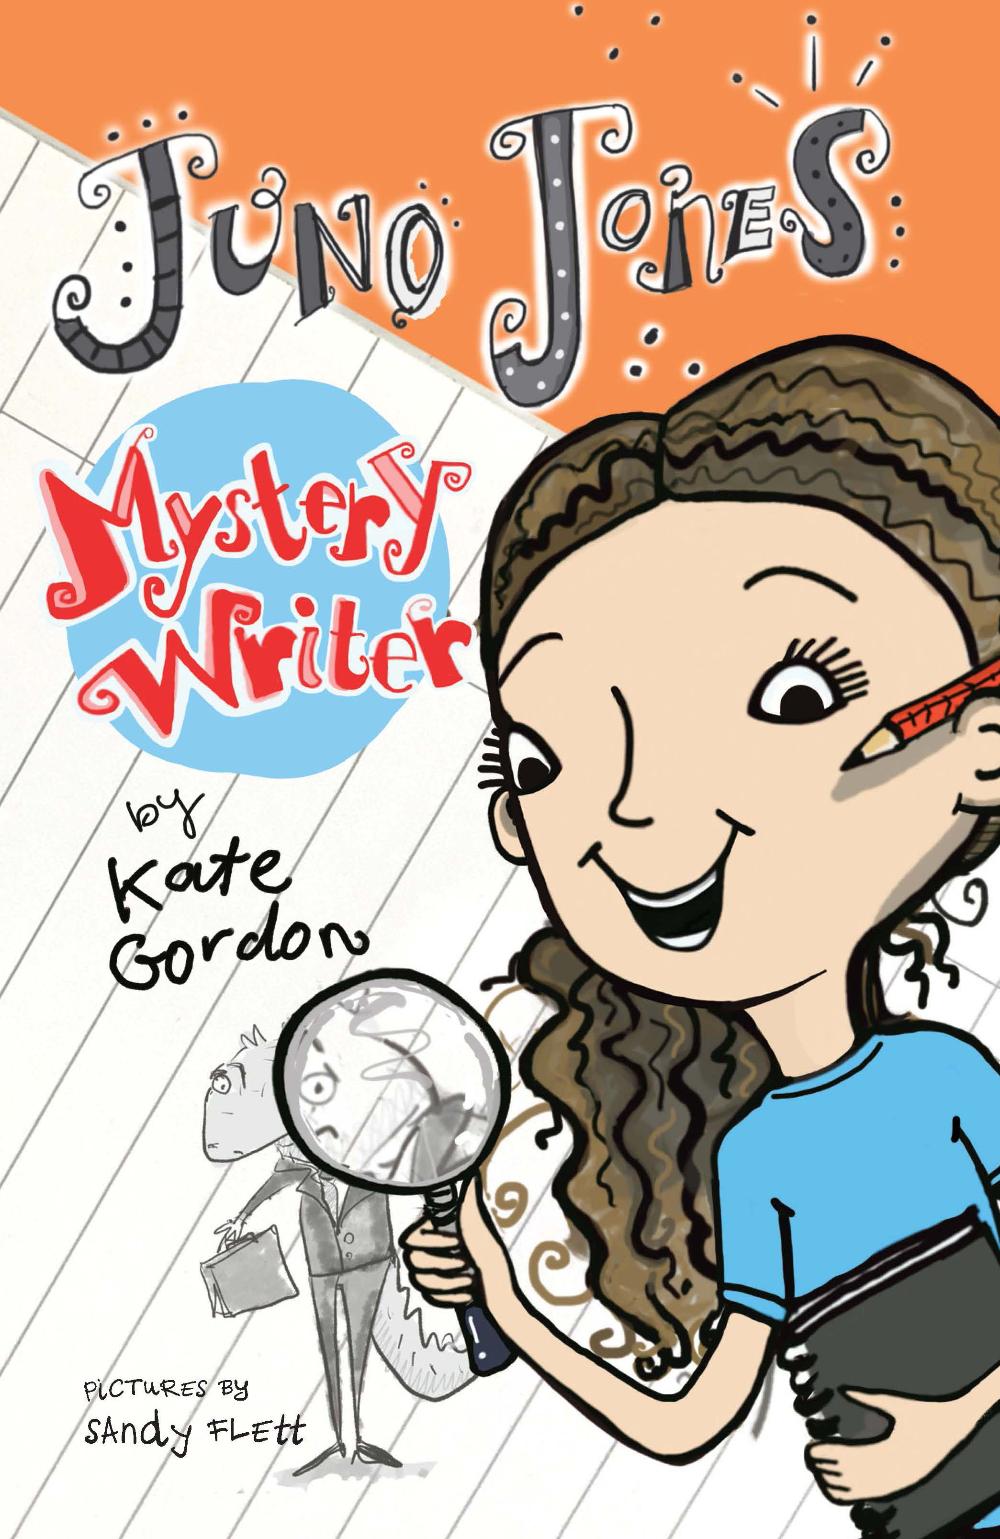 Cover for Juno Jones Mystery Writer, book 2 in the Juno Jones series